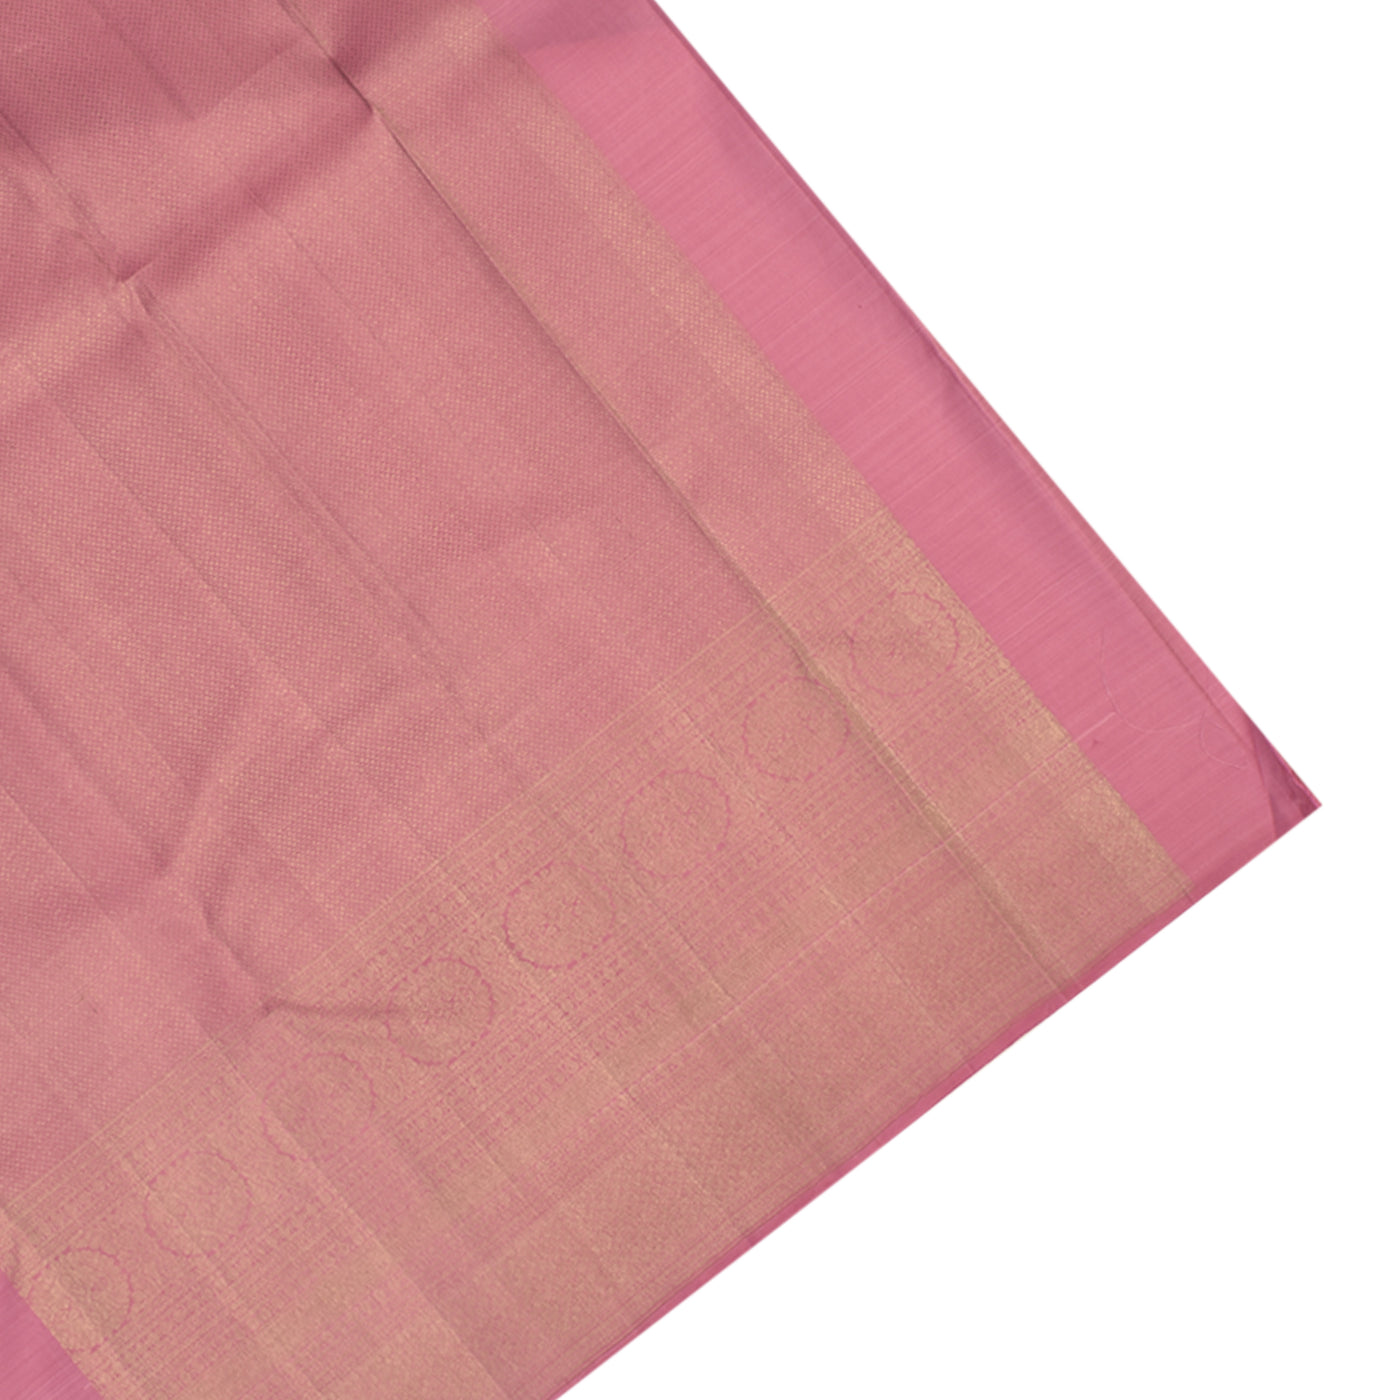 Baby Pink Kanchipuram Silk Saree with Zari Kattam Design